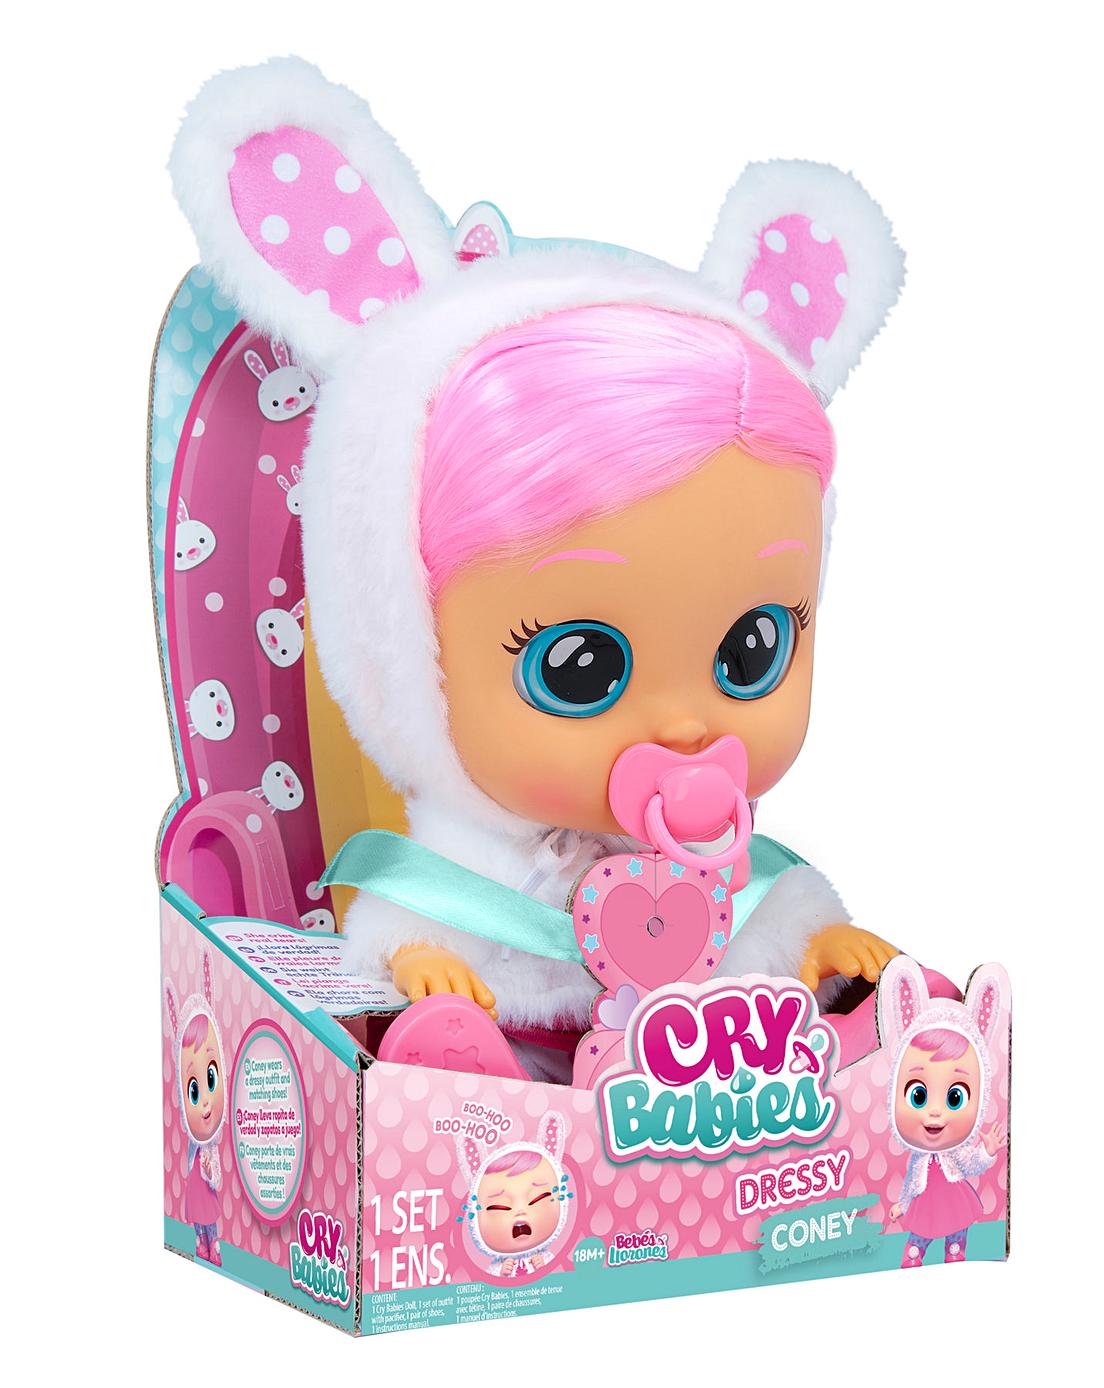 Cry Babies Dressy Coney Doll